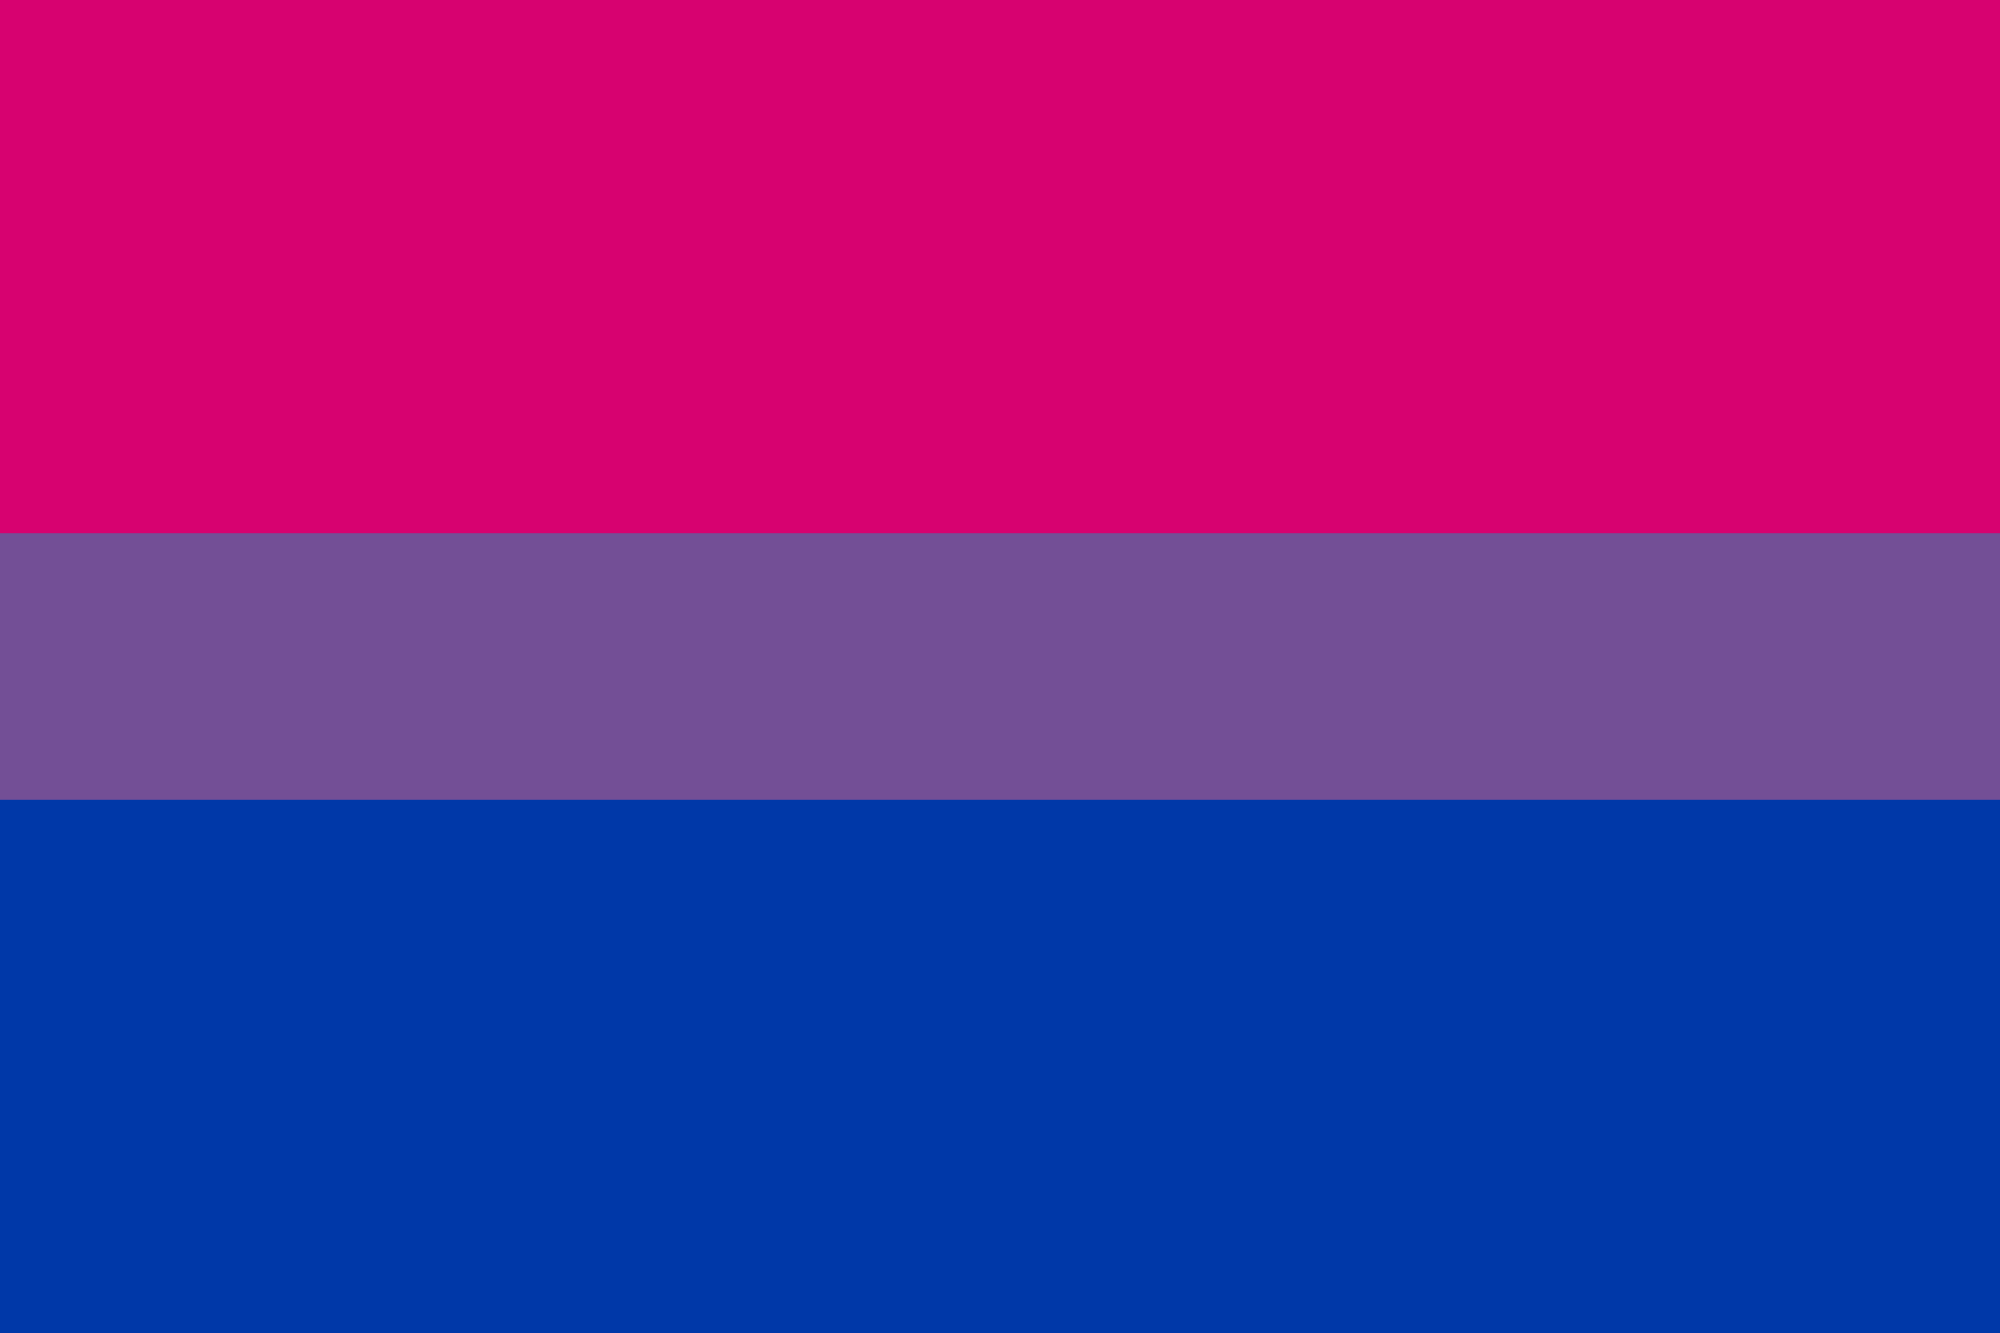 [19+] Bisexual Flag Wallpapers on WallpaperSafari